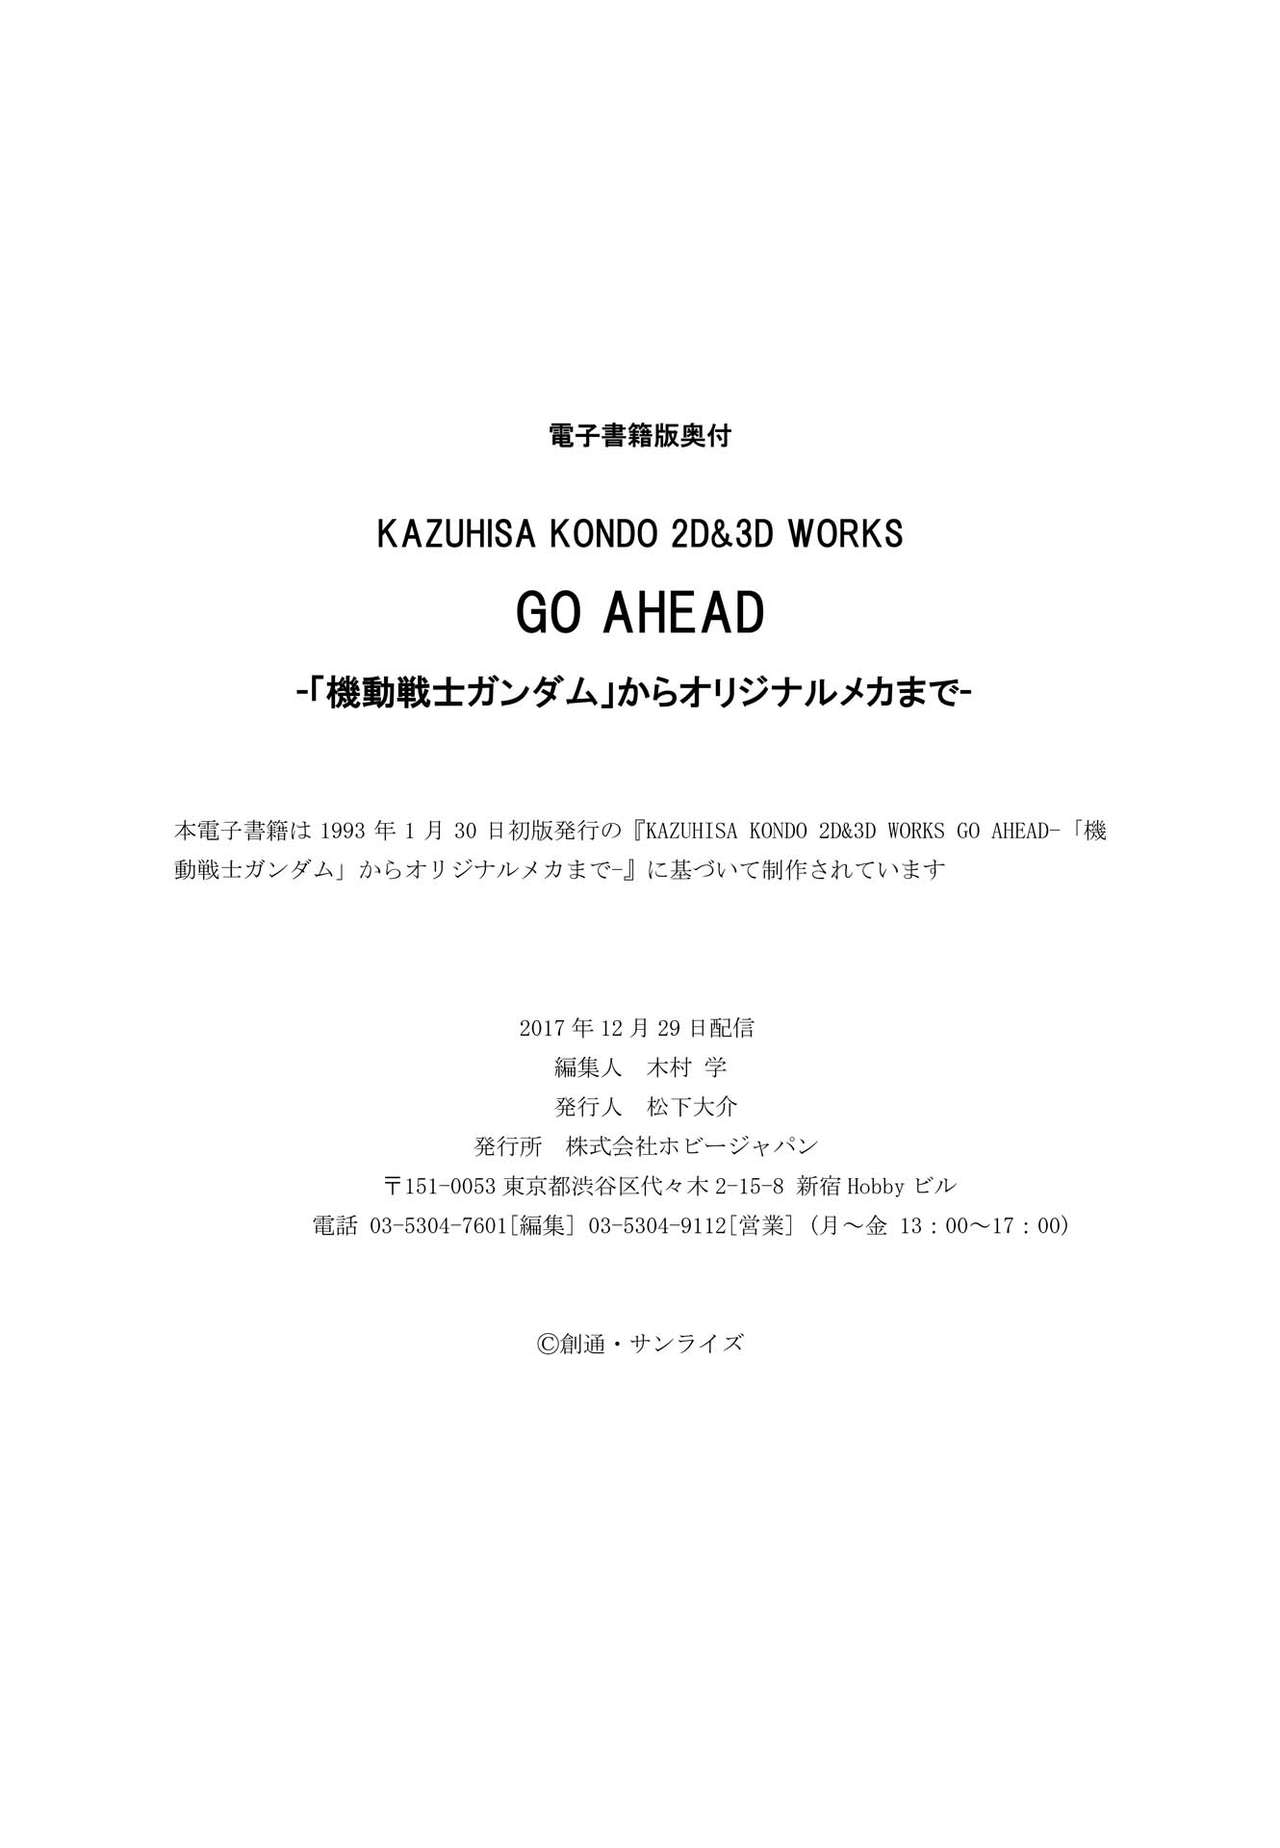 [Kazuhisa Kondo] Kazuhisa Kondo 2D & 3D Works - Go Ahead - From Mobile Suit Gundam to Original Mechanism 230